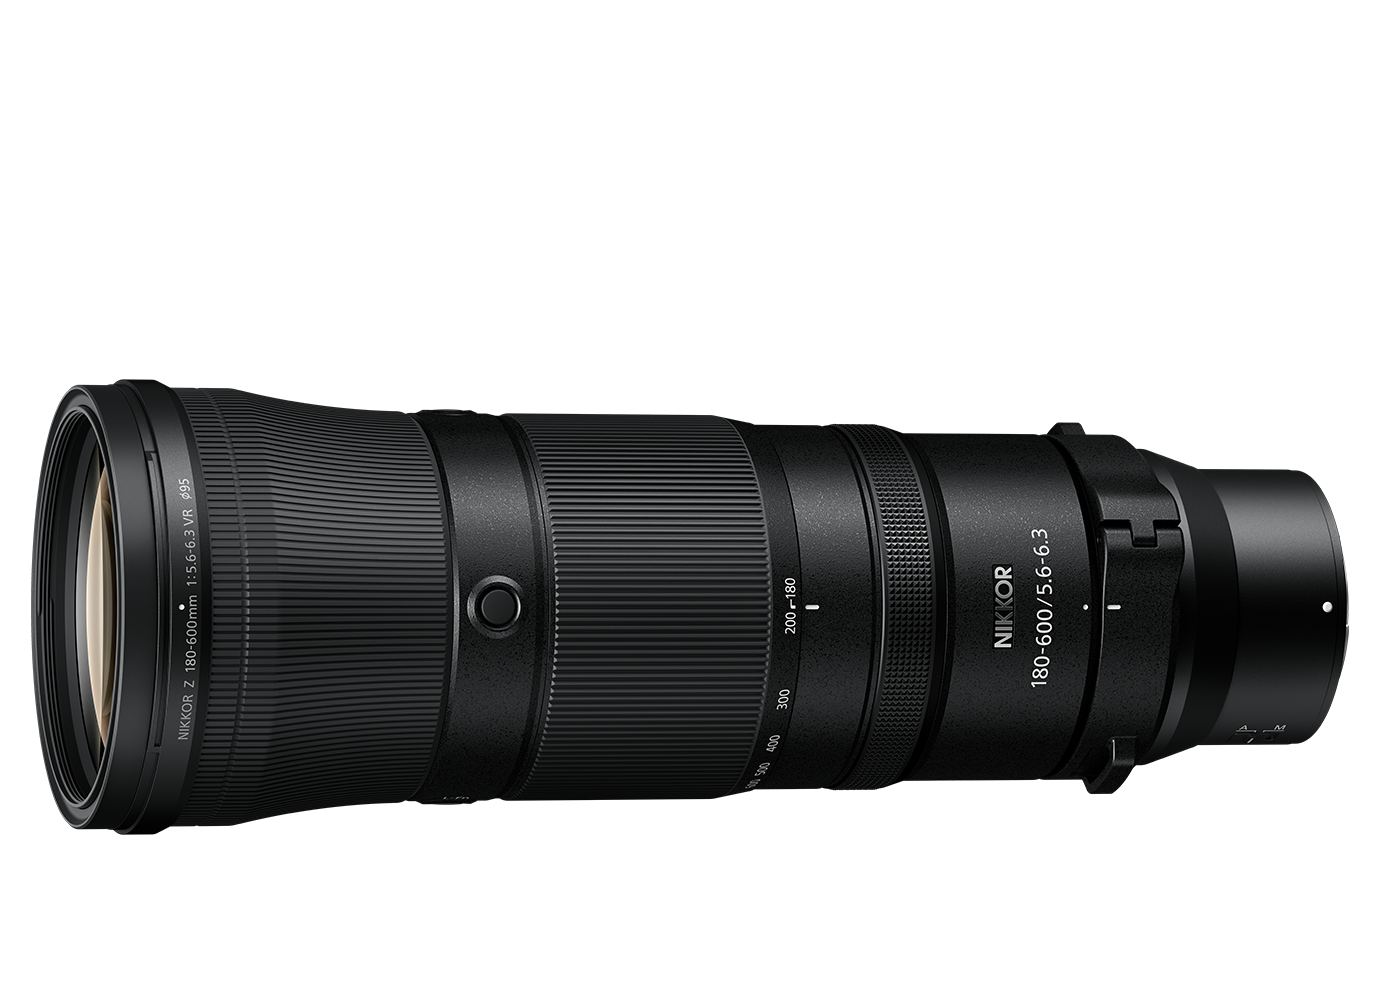 NIKKOR Z 180-600mm f/5.6-6.3 VR Super-telephoto Lens | Nikon Cameras, Lenses & Accessories